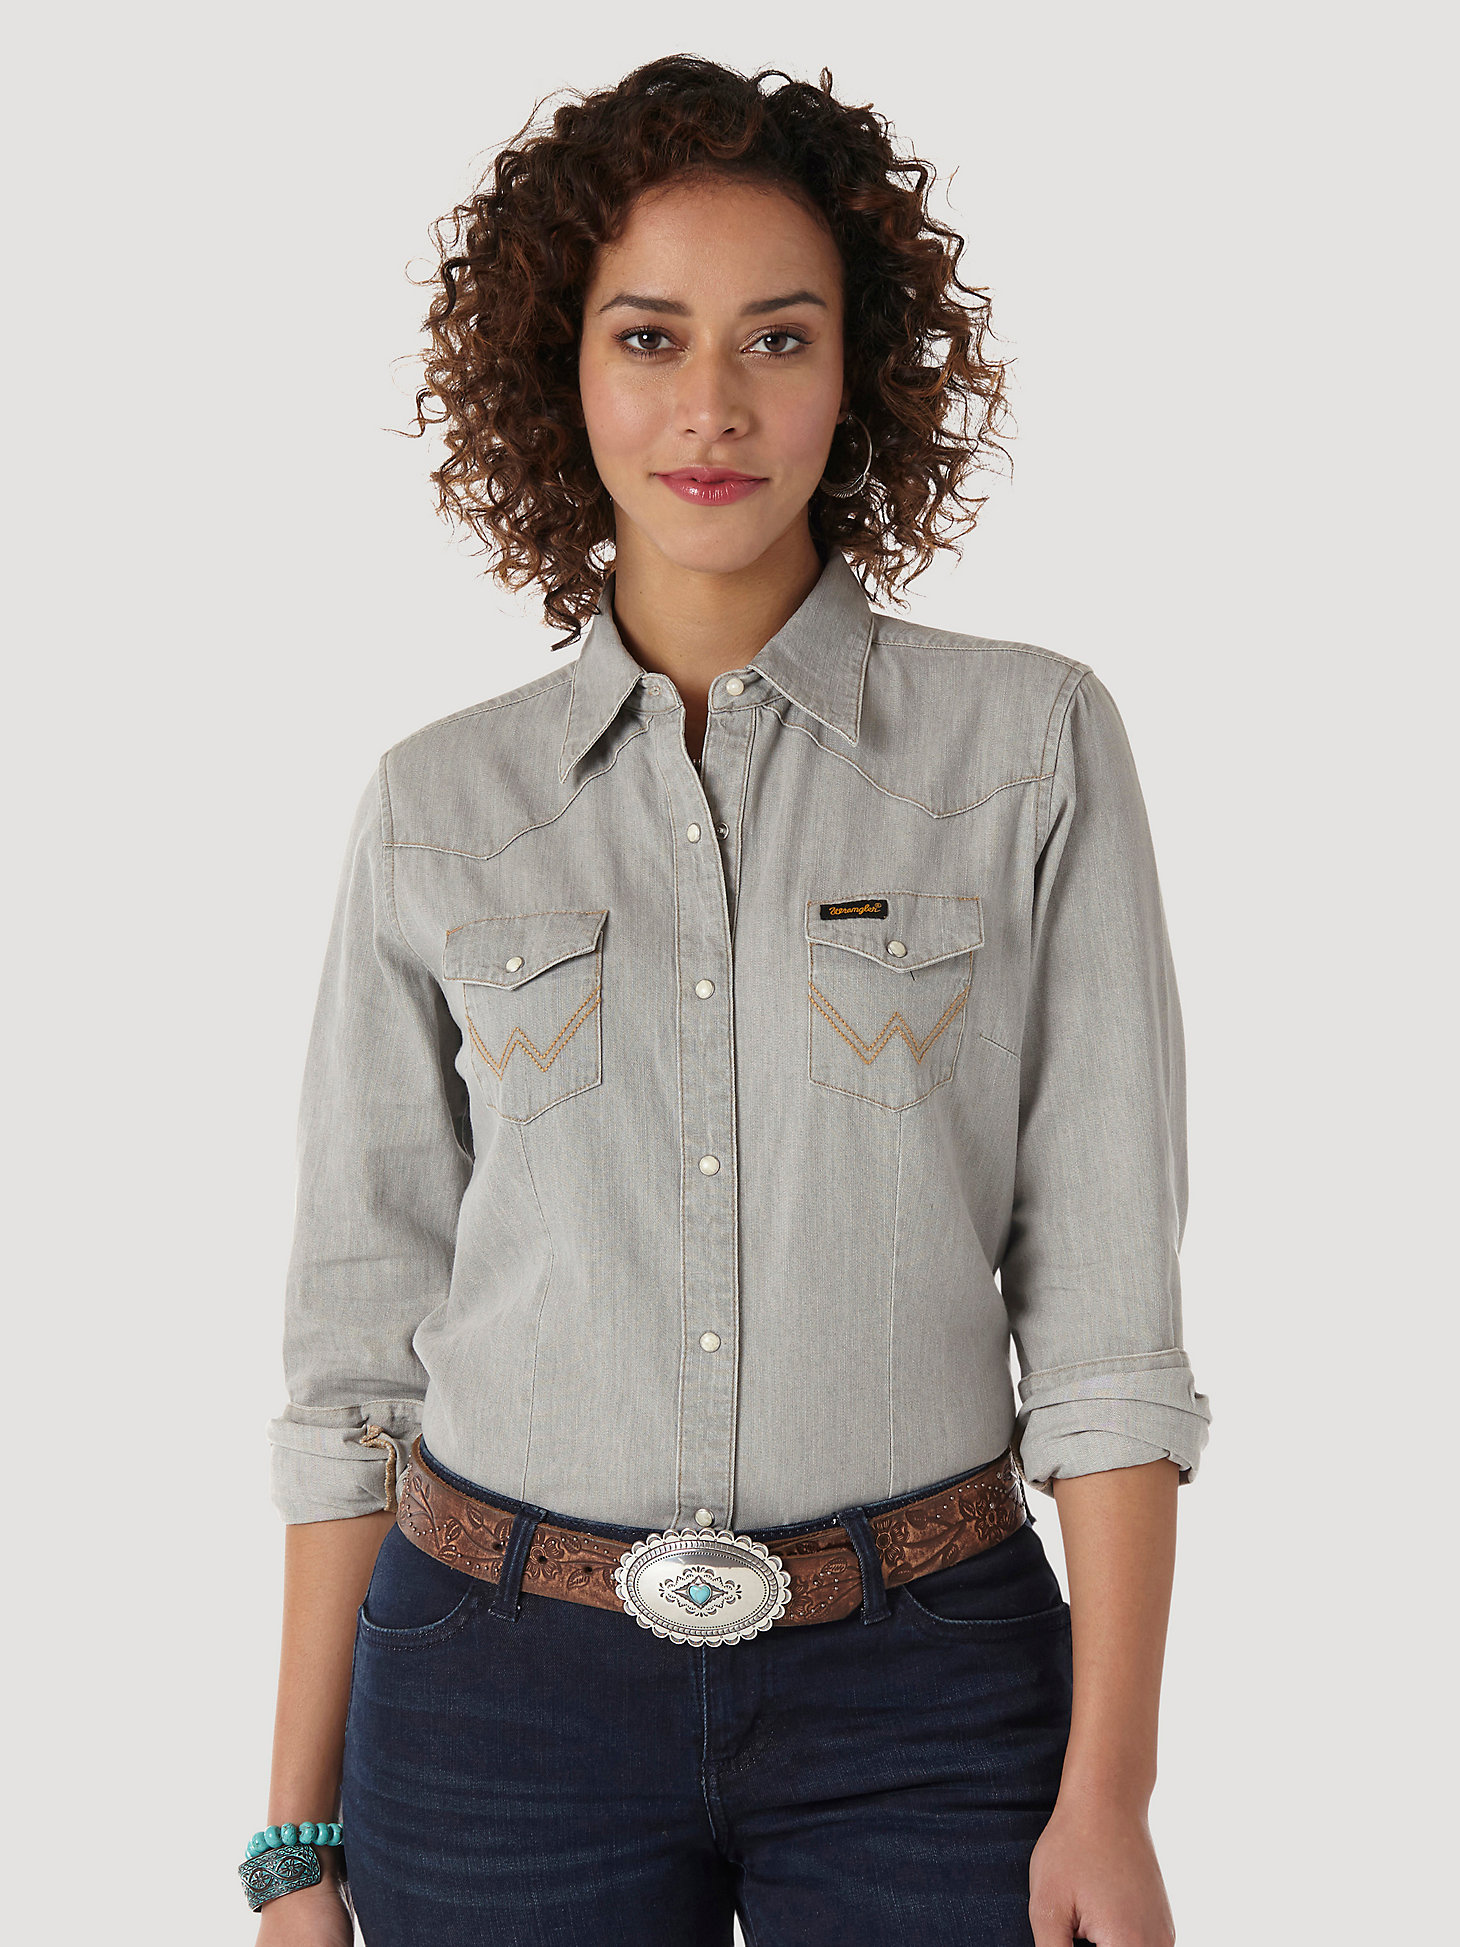 Women’s Long Sleeve Western Snap W Stitching on Pocket Denim Shirt in Grey Denim alternative view 1